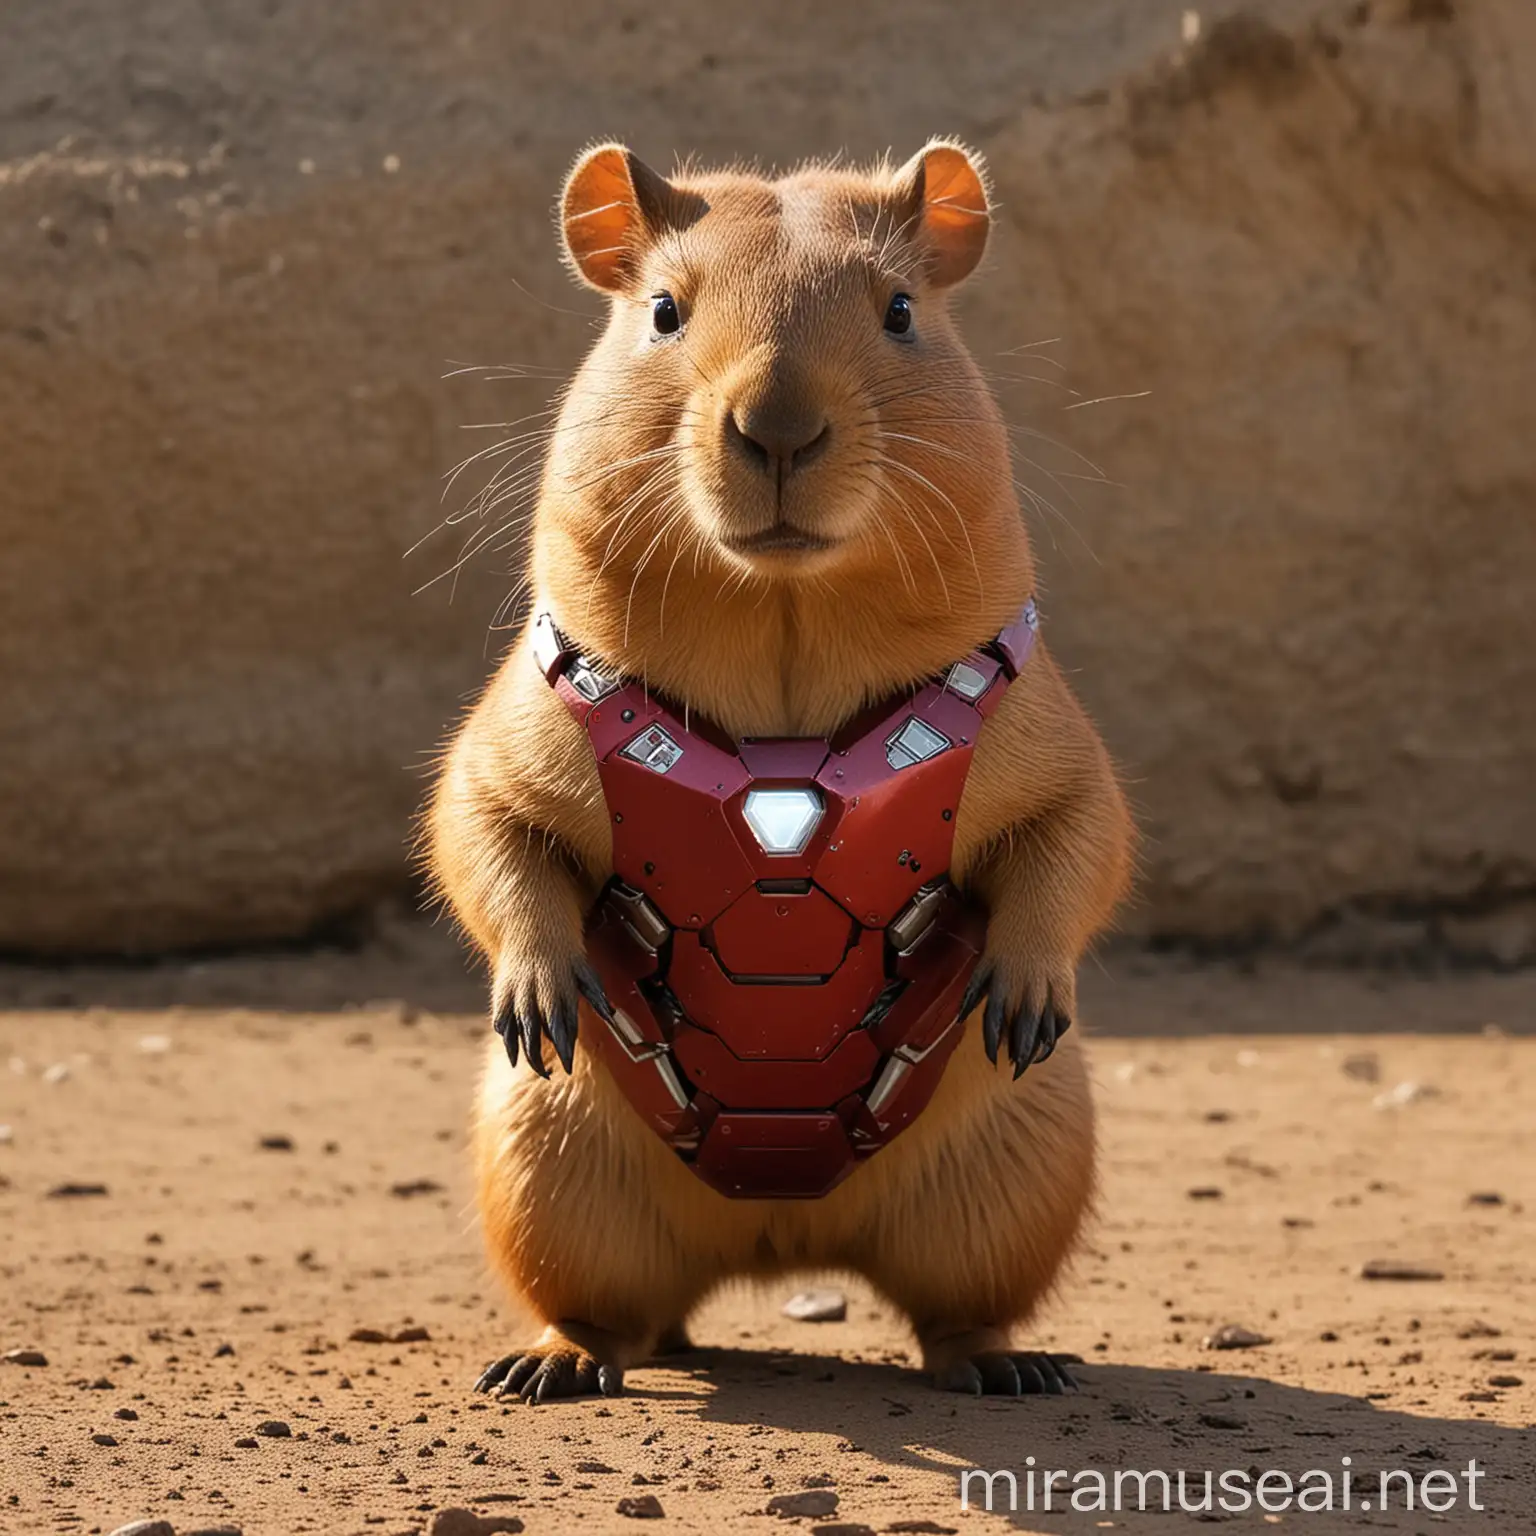 Cute Capybara Dressed as Iron Man